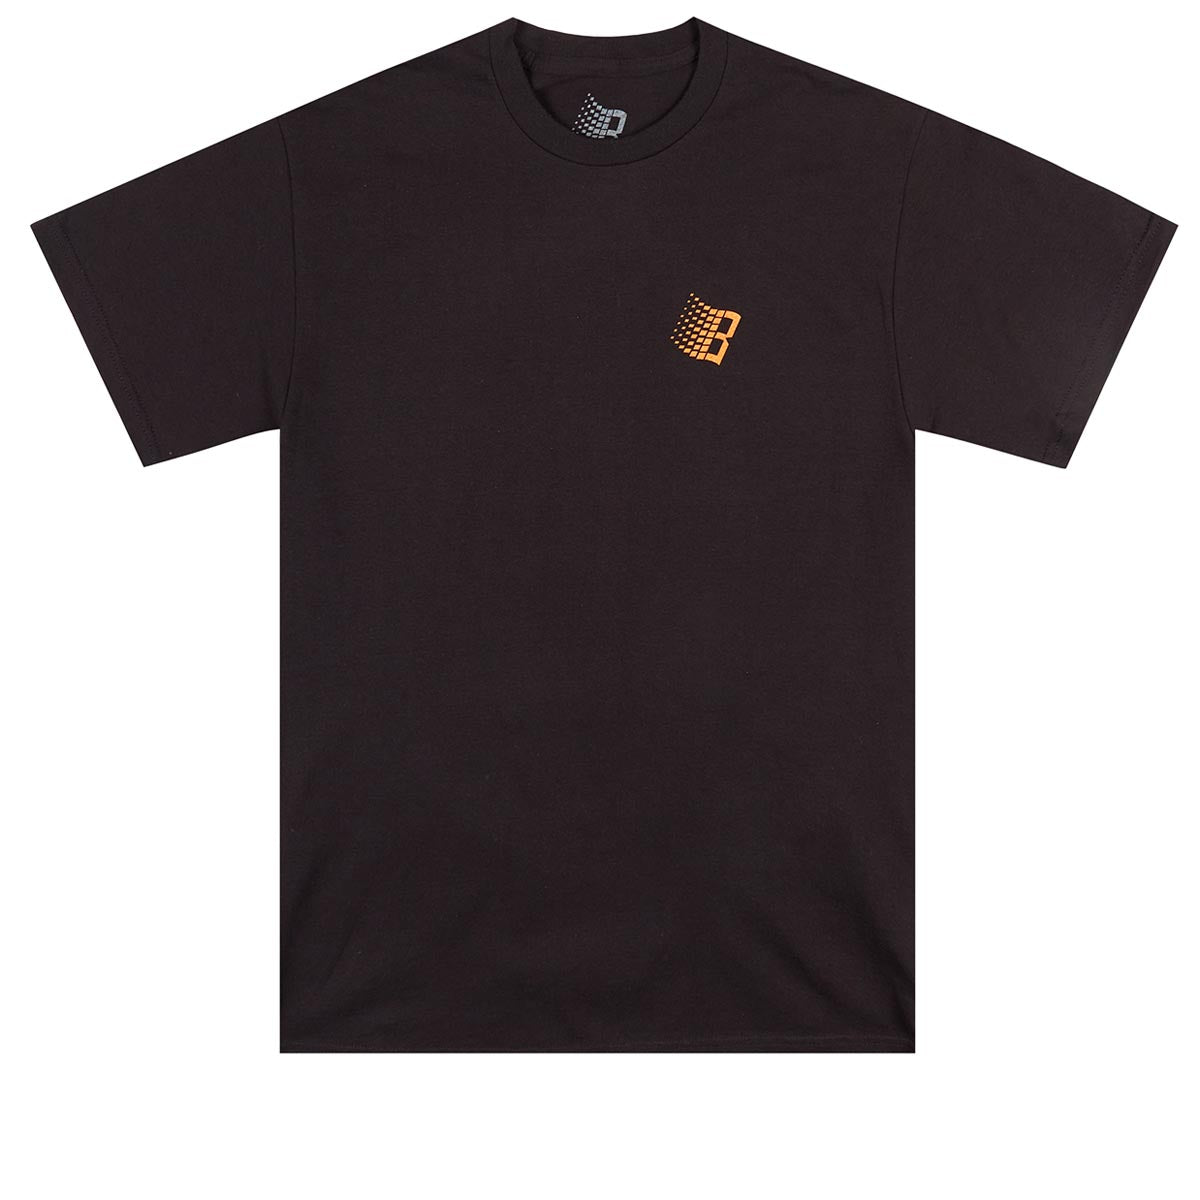 Bronze 56k B Logo T-Shirt - Black image 2